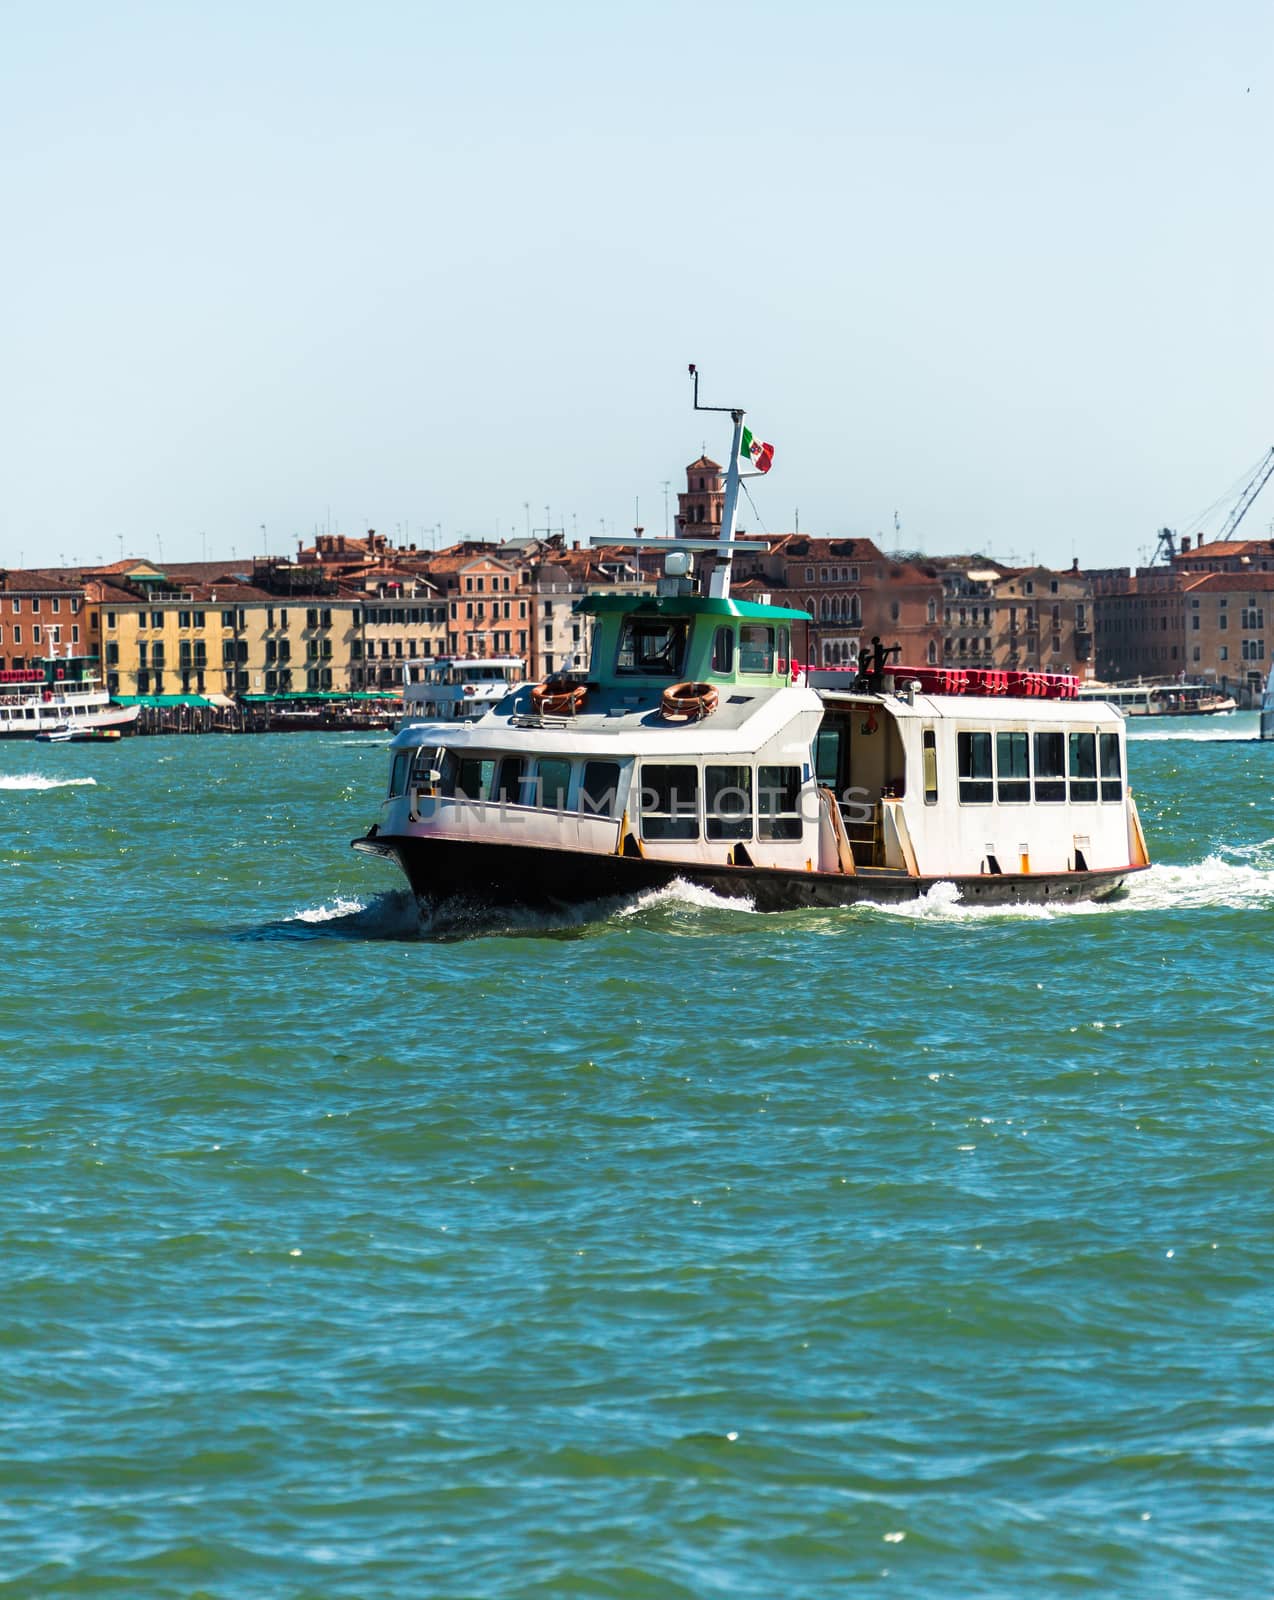  Boat floating from the island of San Giorgio, Venice, Italy